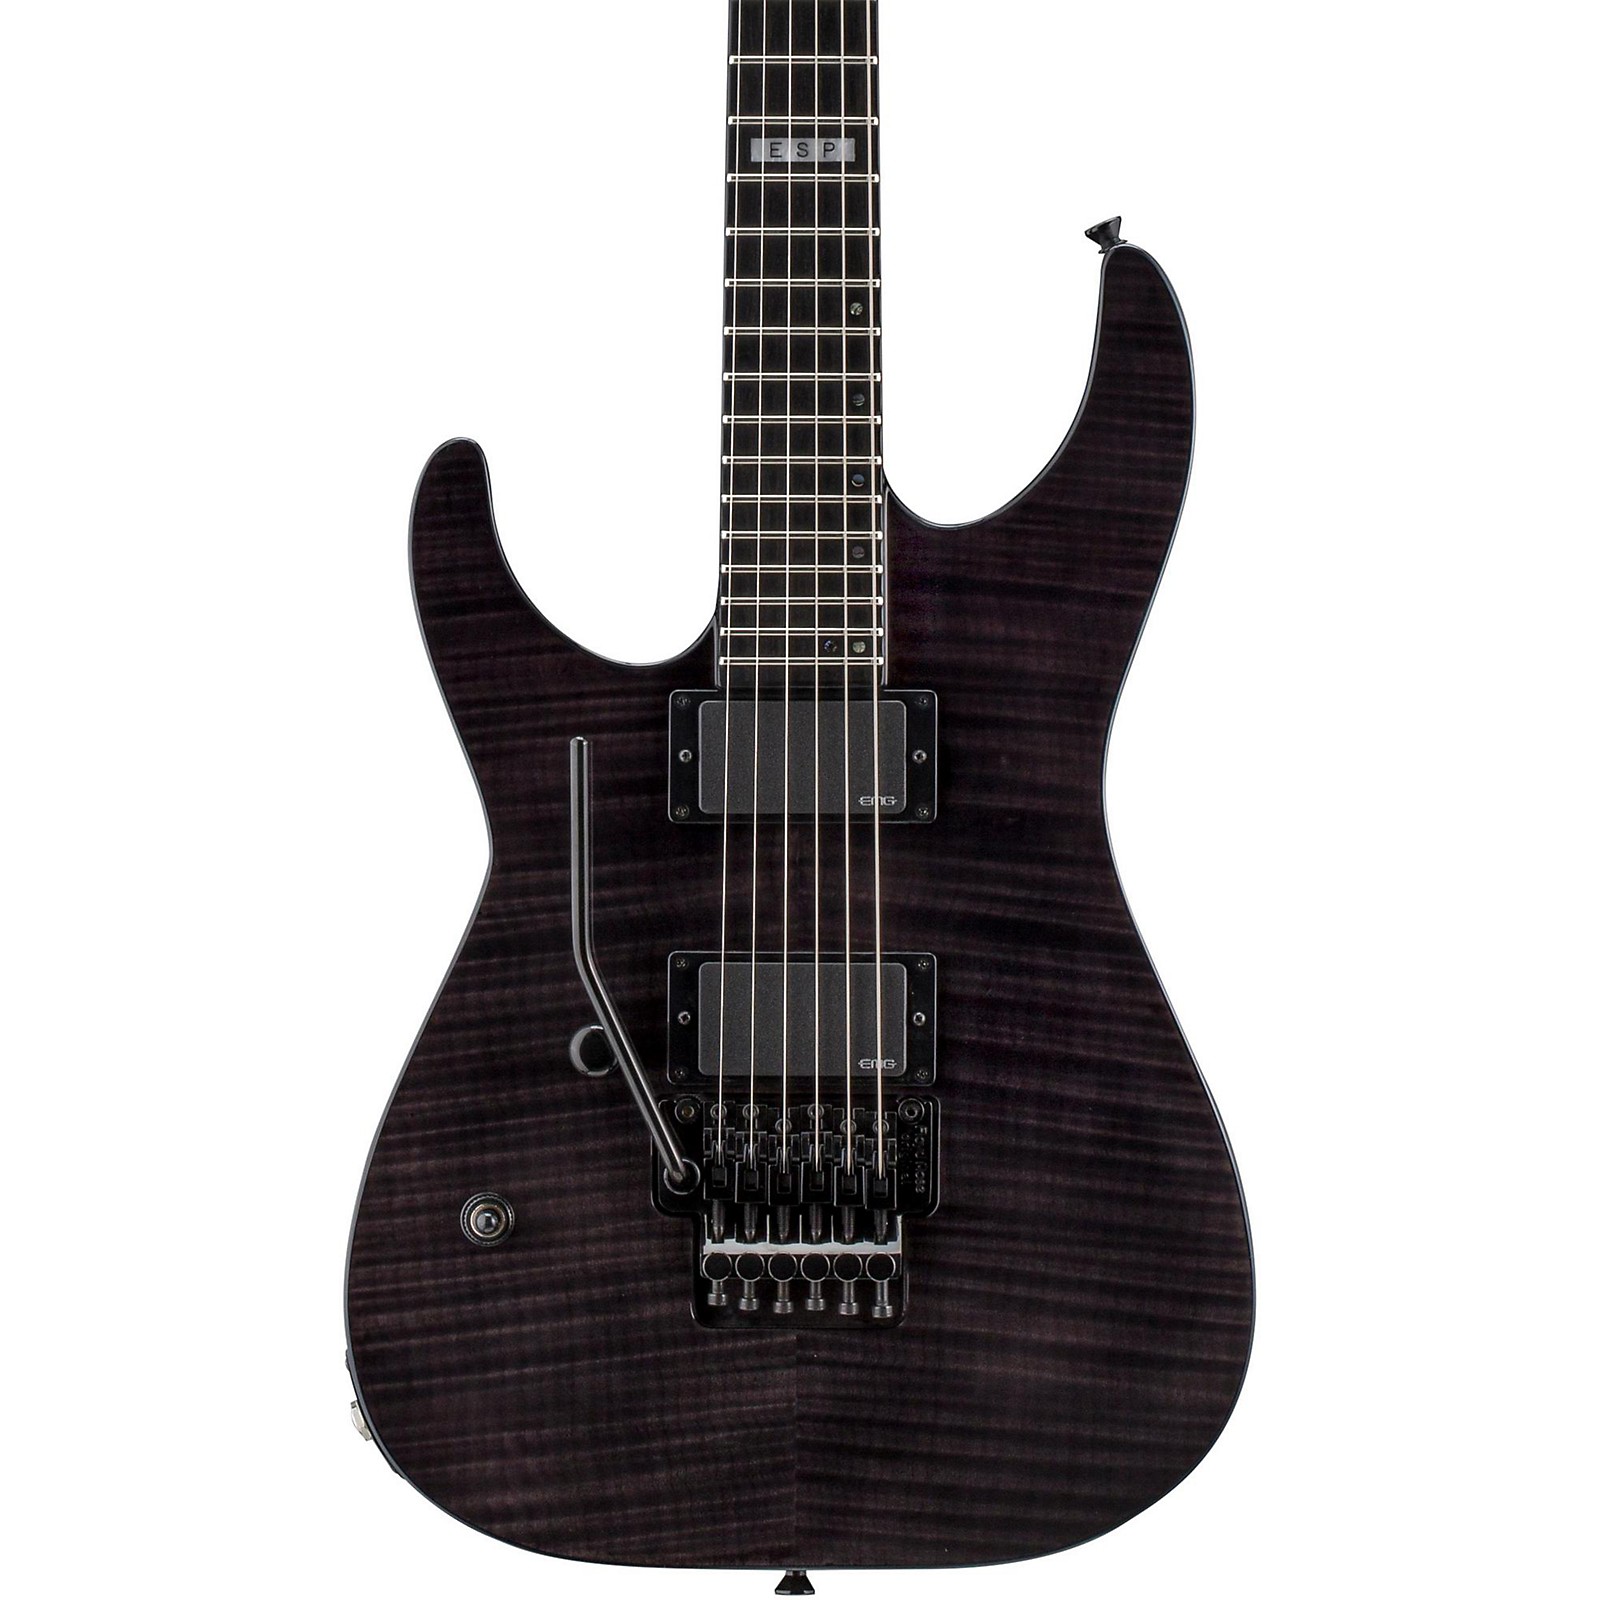 ESP E-II M-2 Left Handed Electric Guitar See-Thru Black